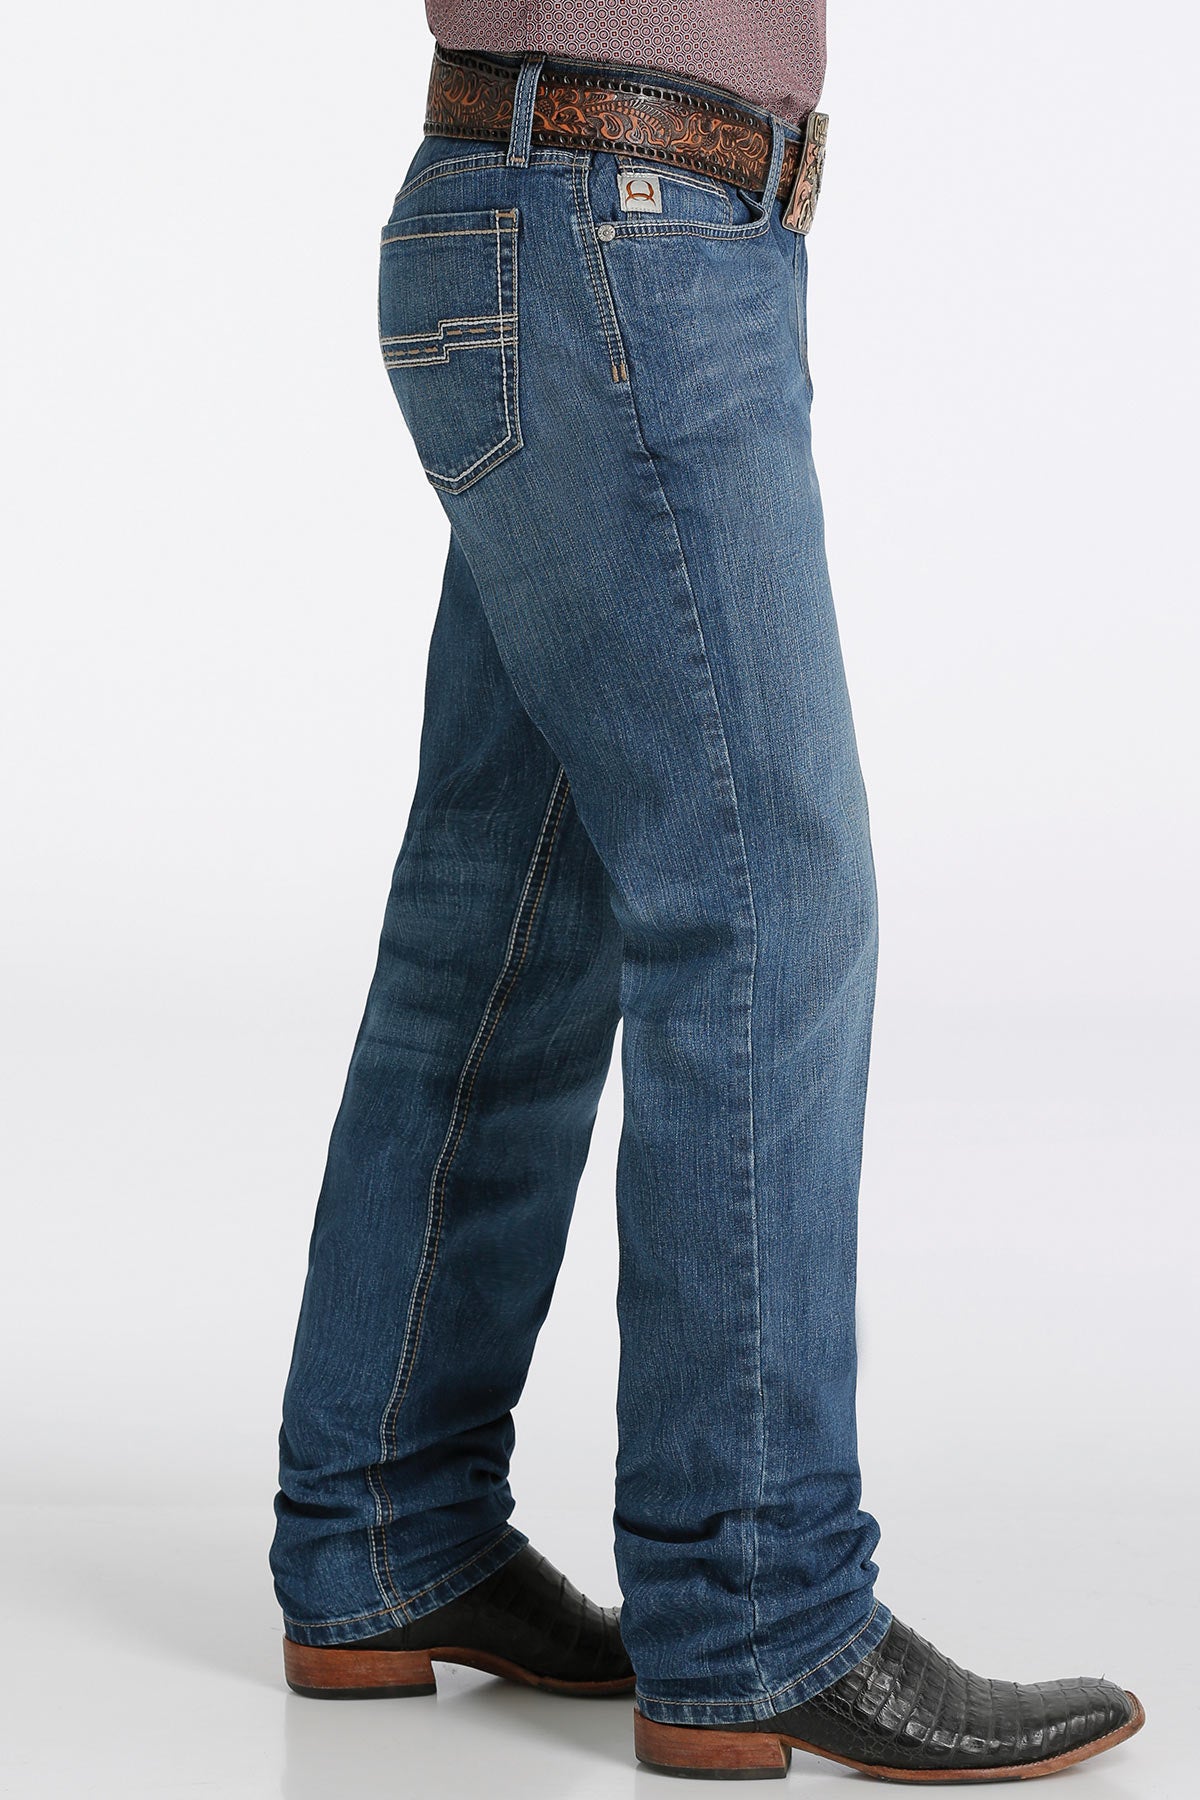 Cinch Jesse Jeans (8001)